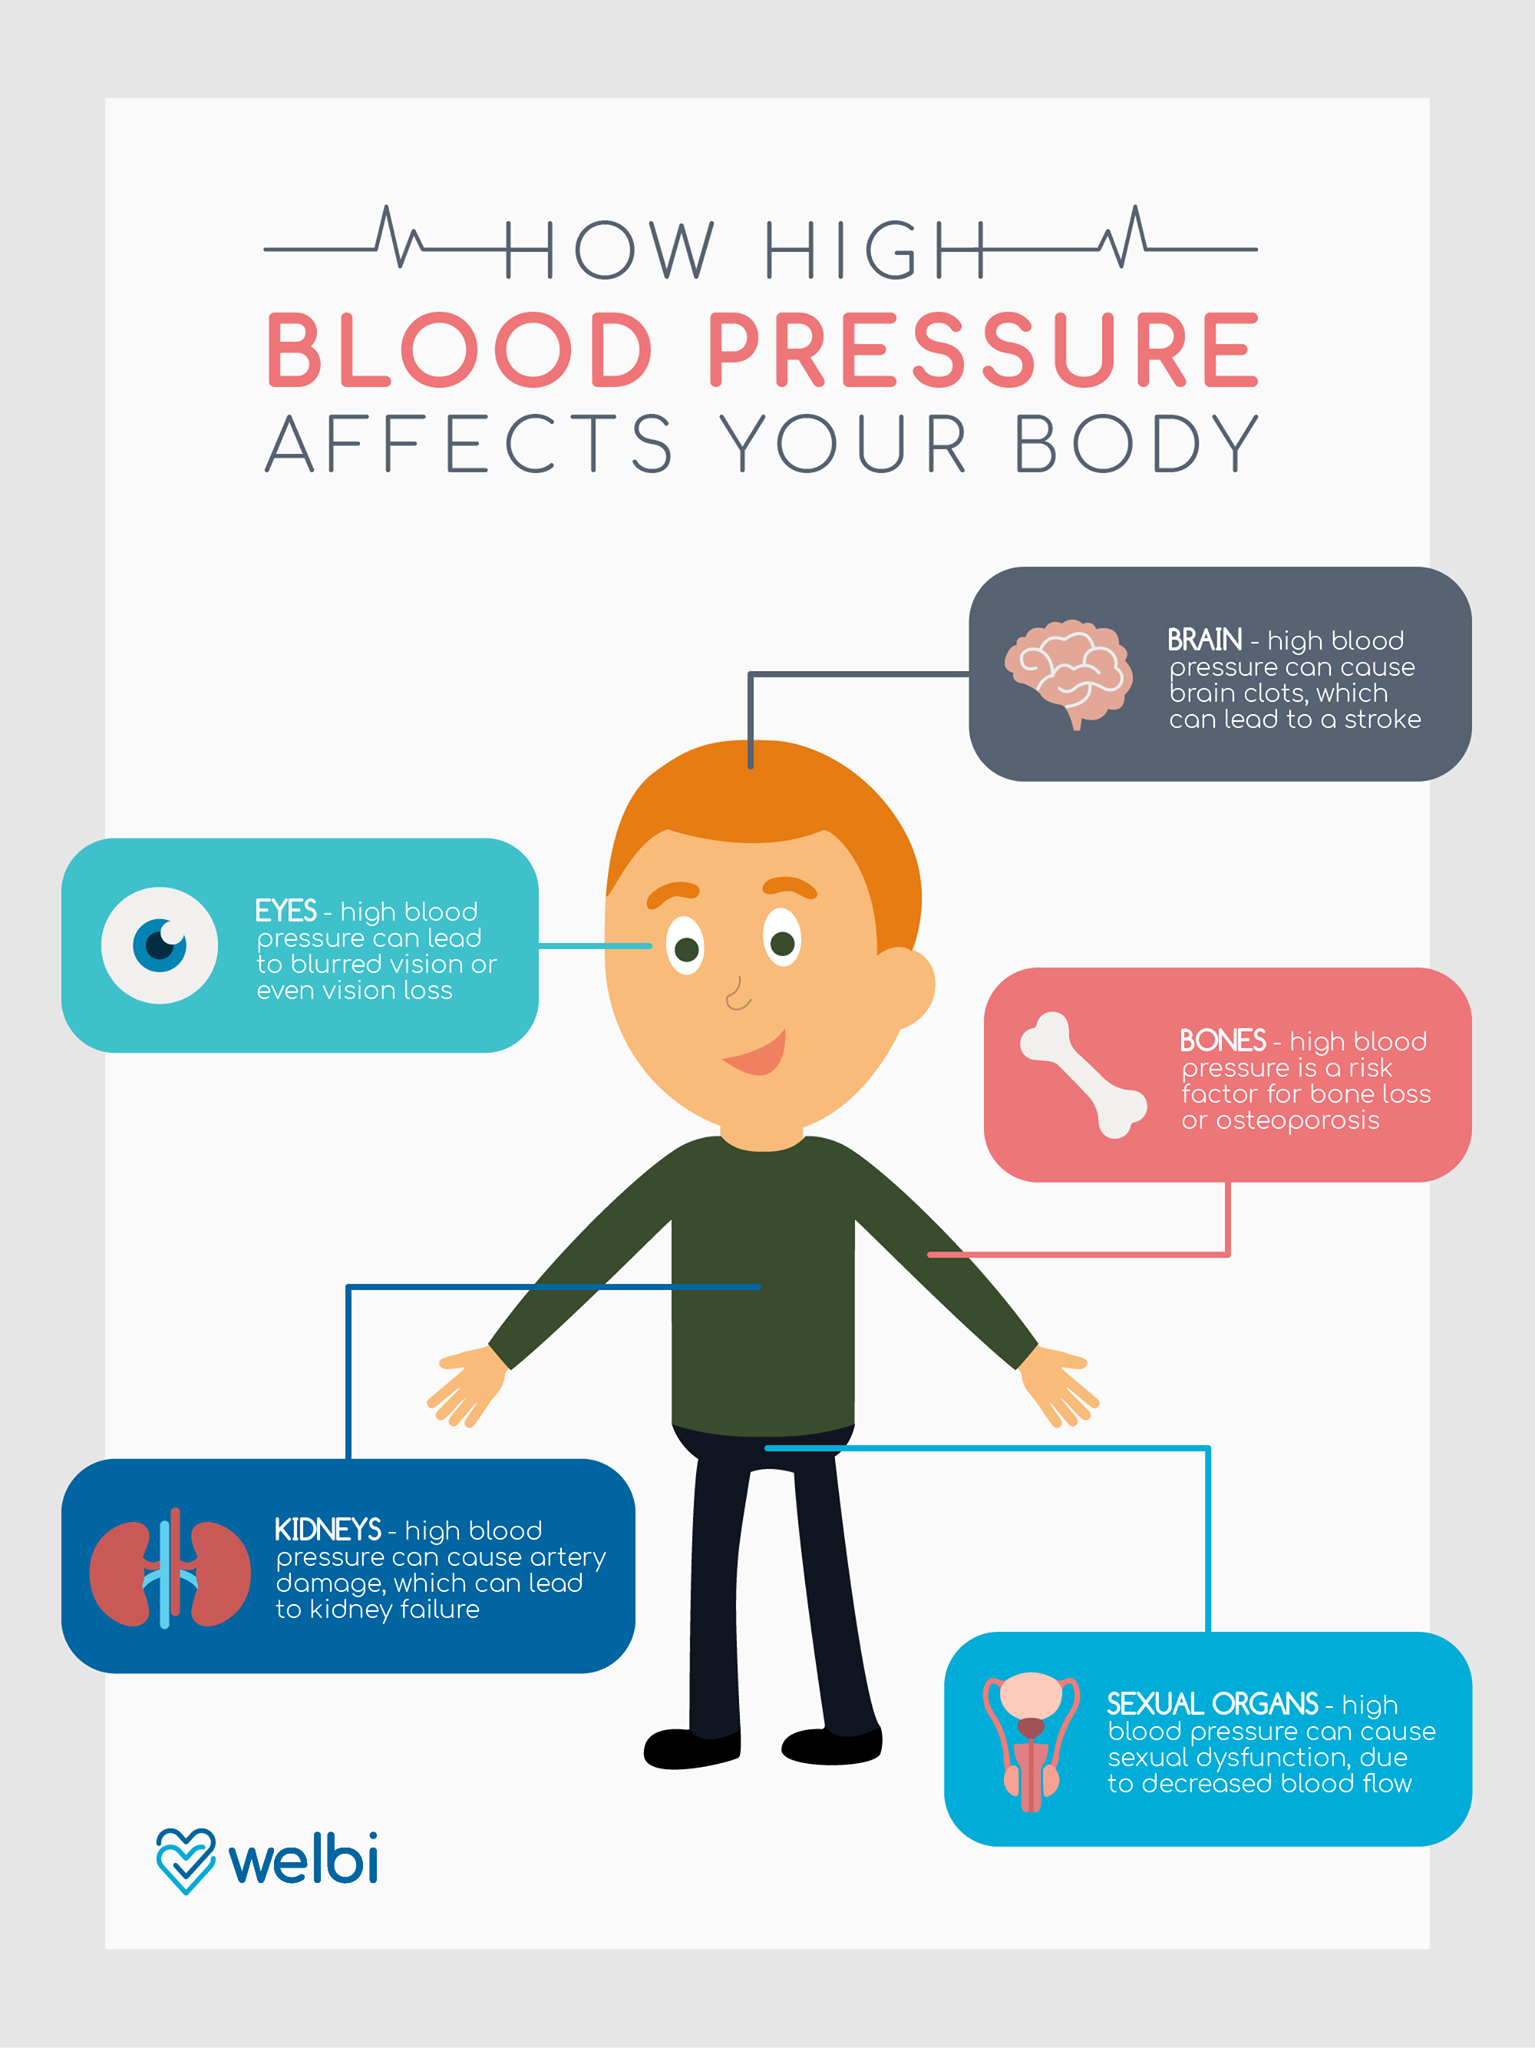 High Blood Pressure Causes Blurry Vision